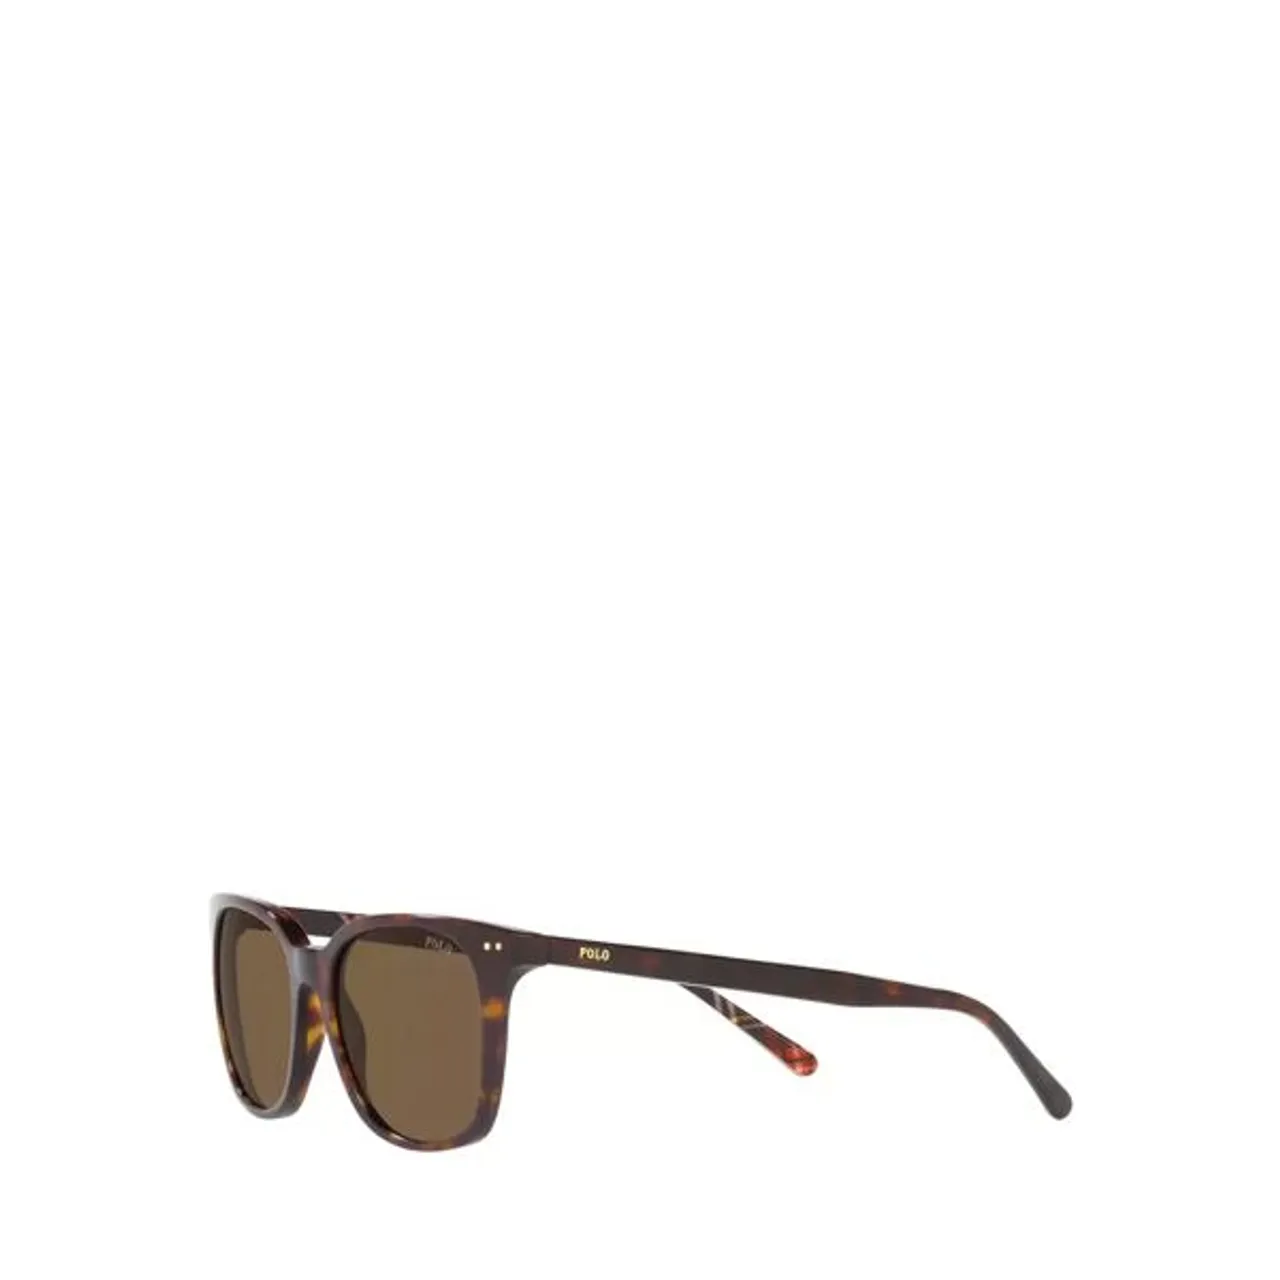 Polo Ralph Lauren PH4187 Men's Sunglasses - Shiny Dark Havana/Brown - Male